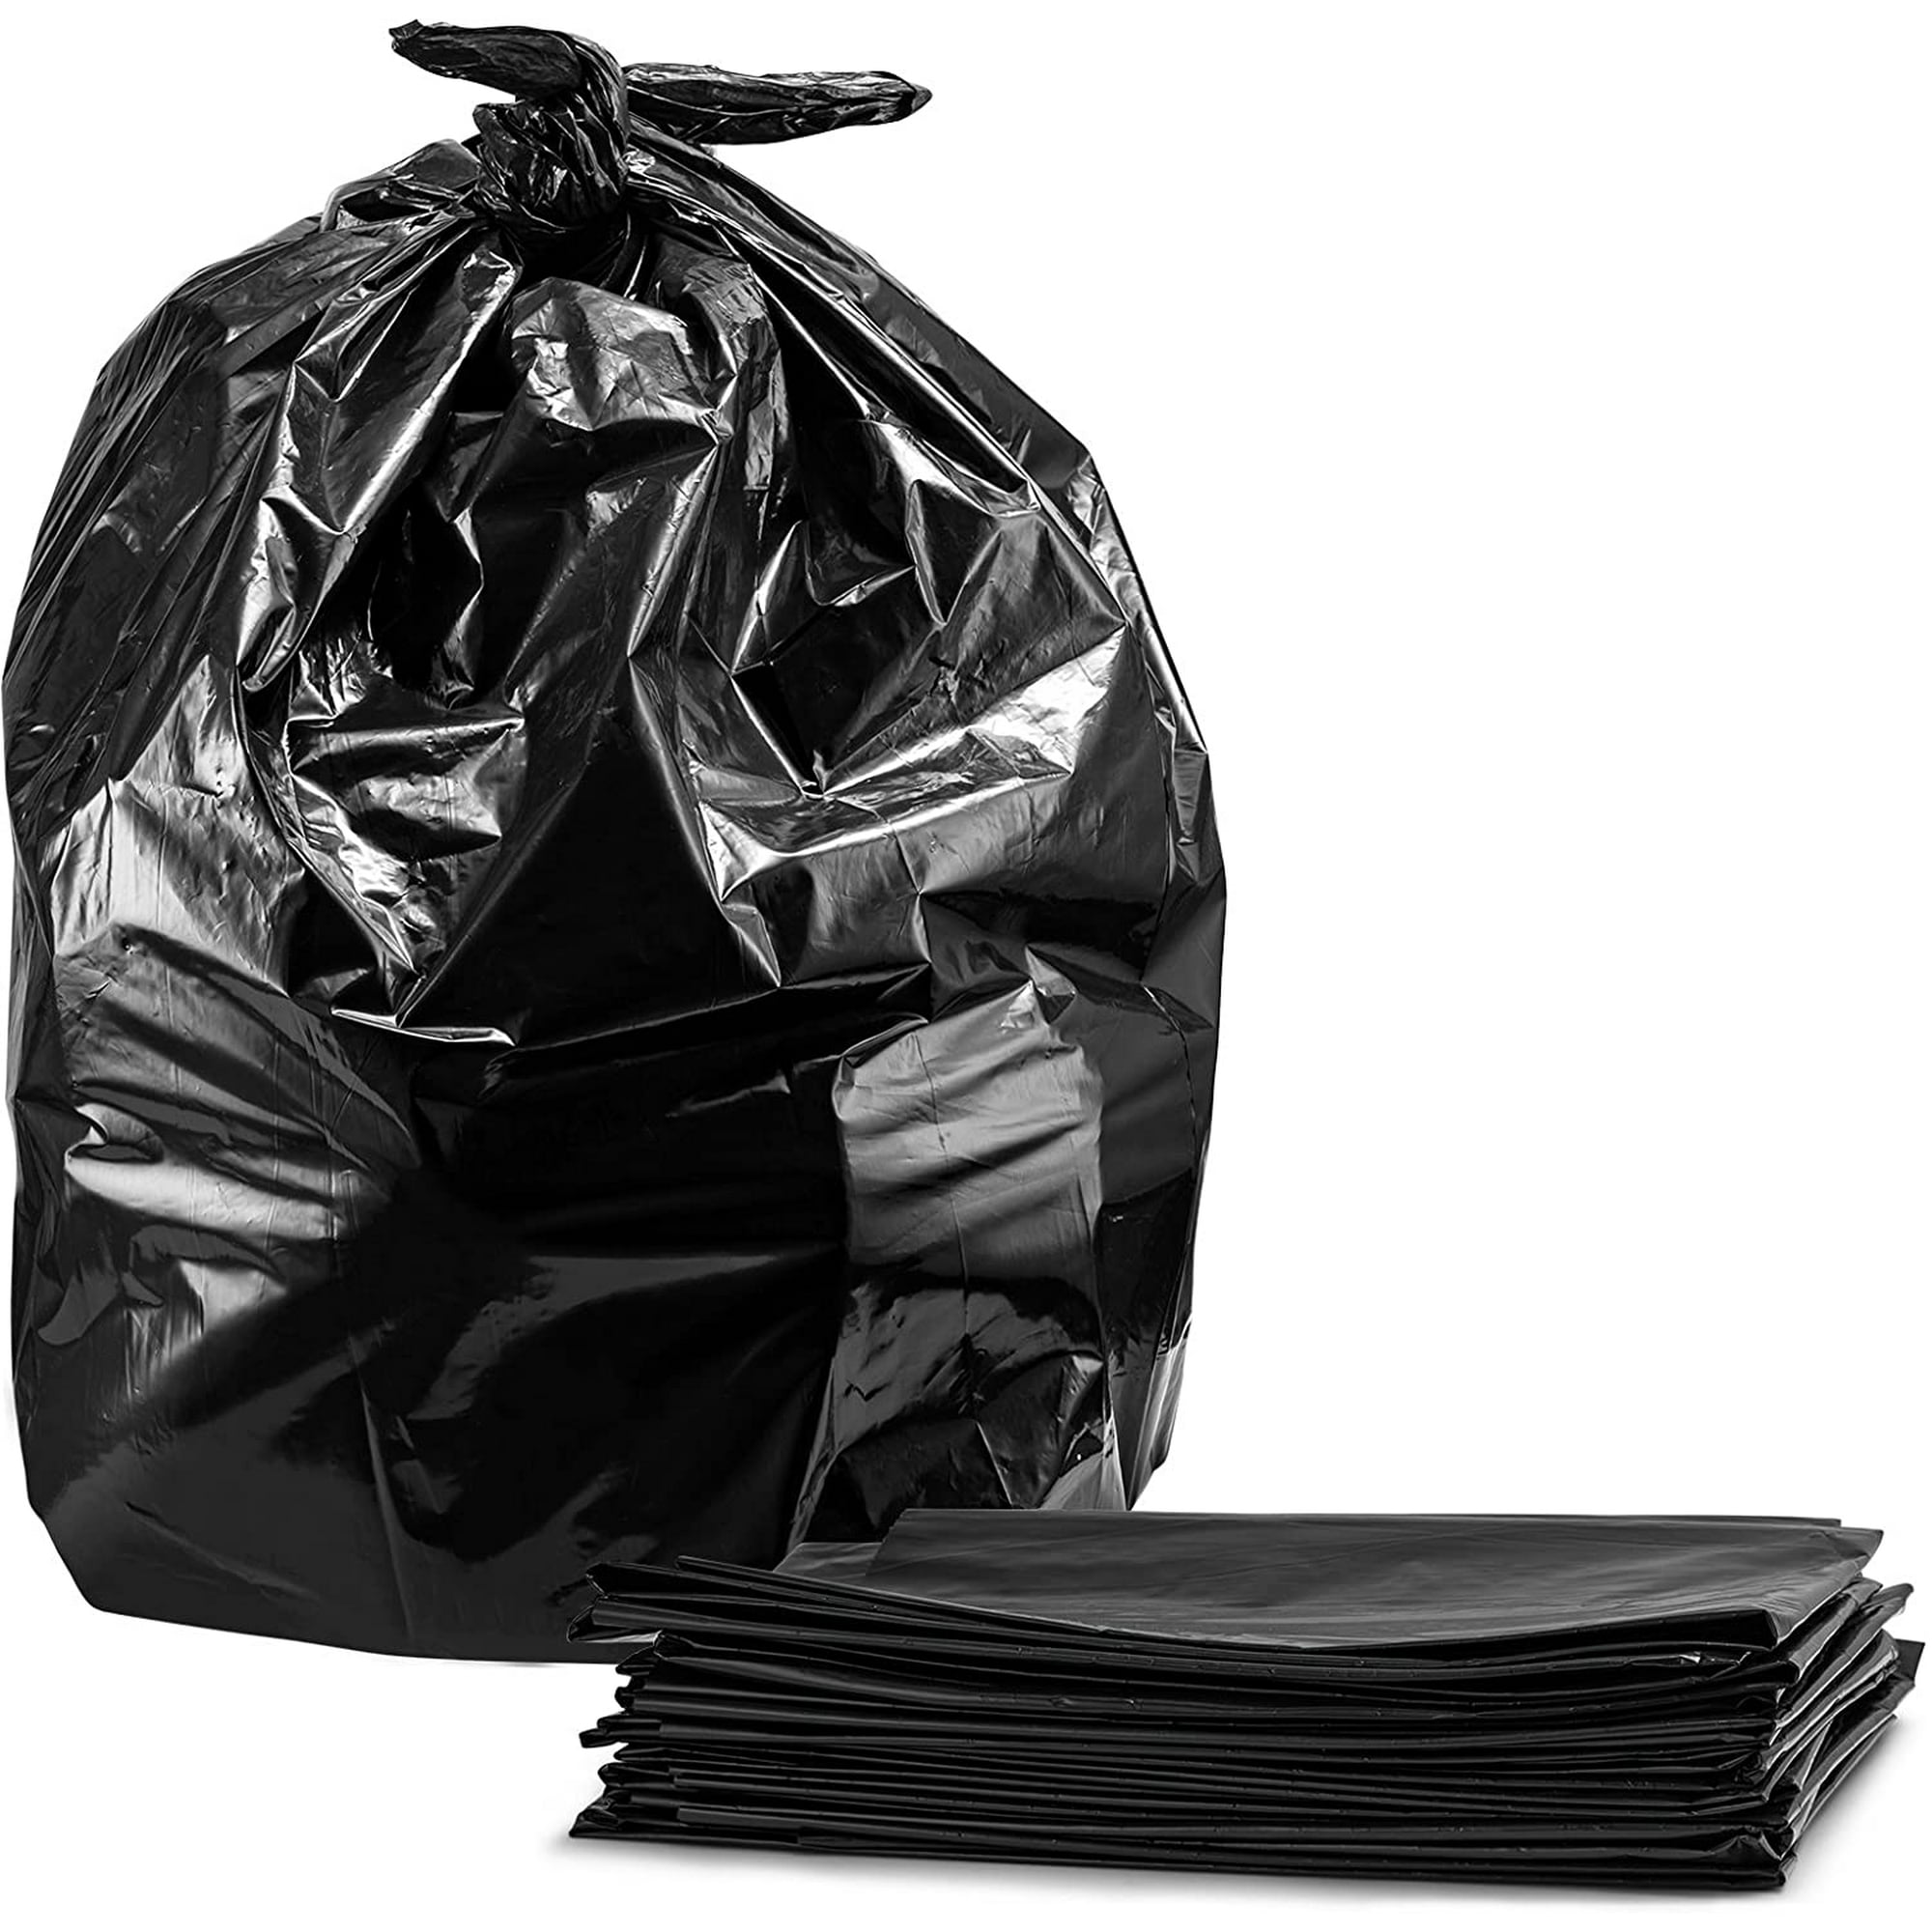 Beneficios del uso de bolsas negras para basura